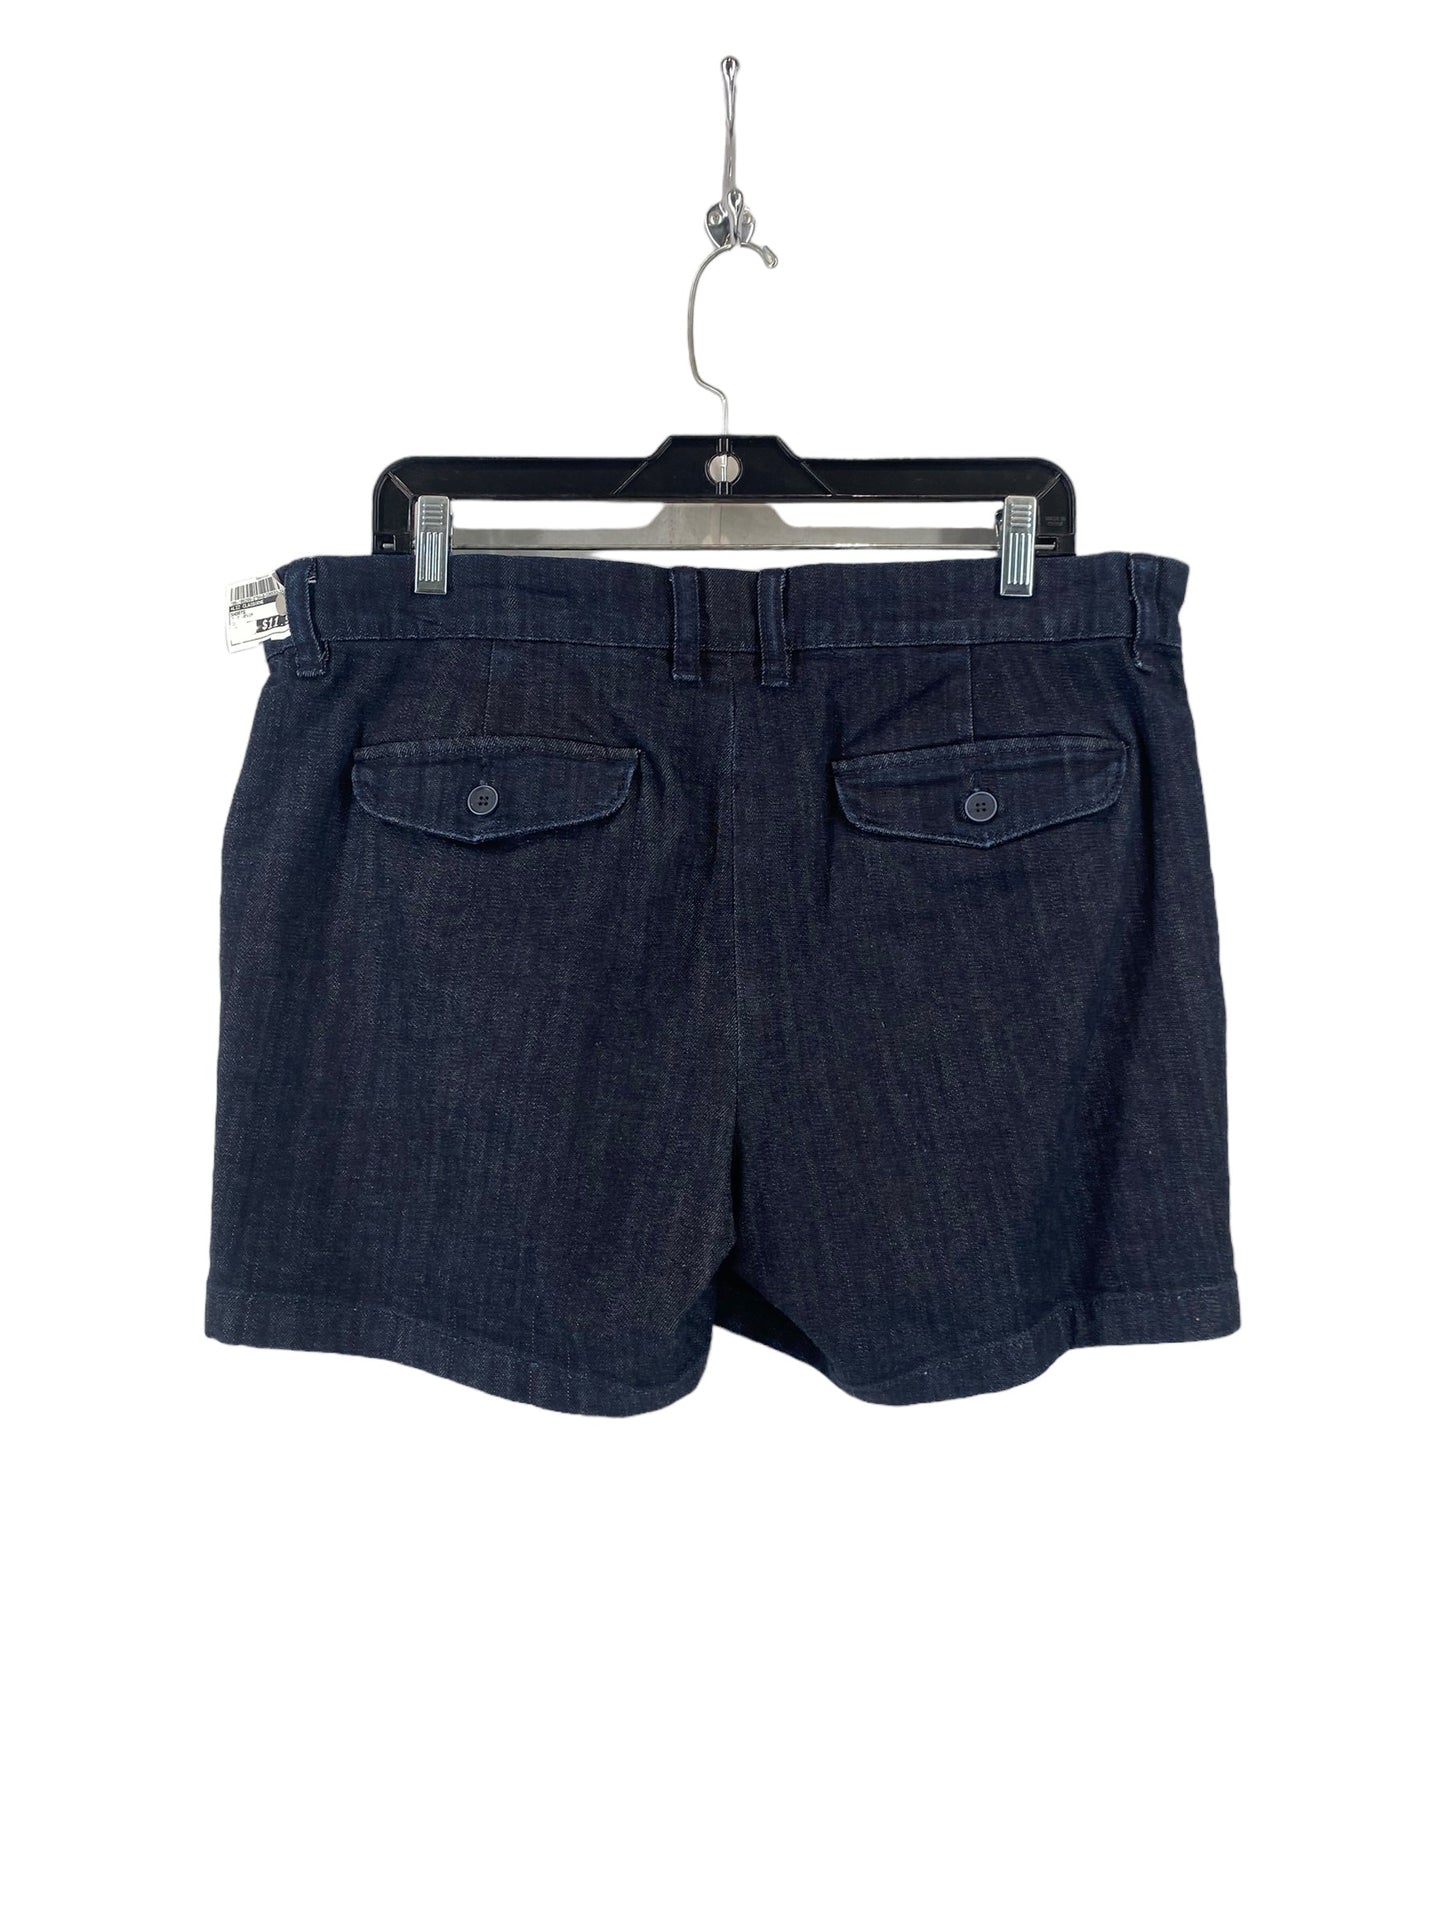 Blue Denim Shorts Liz Claiborne, Size 12